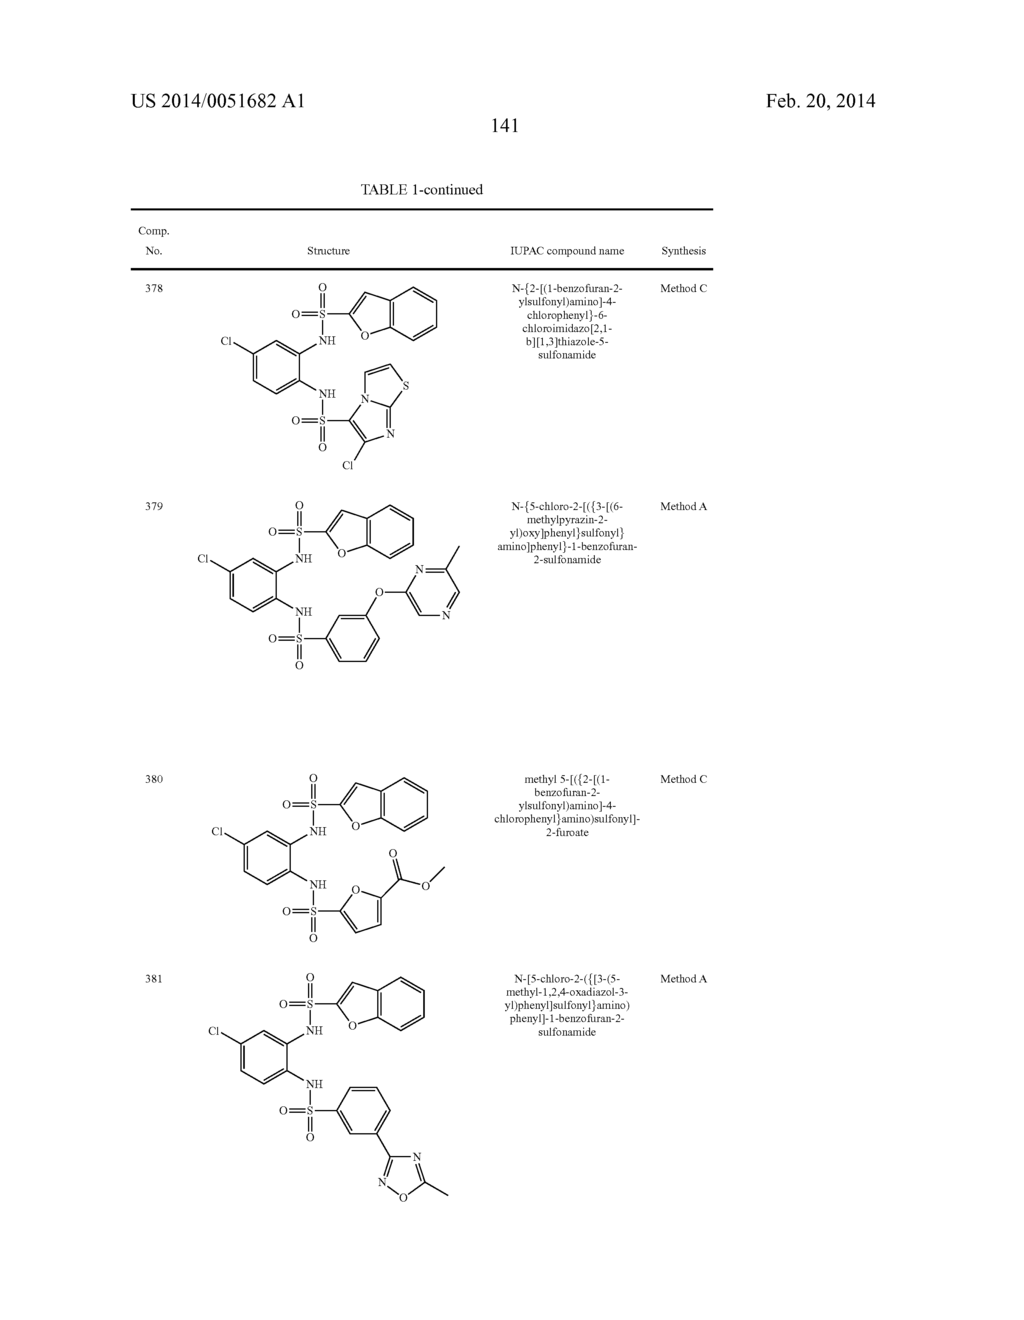 NOVEL 1,2- BIS-SULFONAMIDE DERIVATIVES AS CHEMOKINE RECEPTOR MODULATORS - diagram, schematic, and image 142